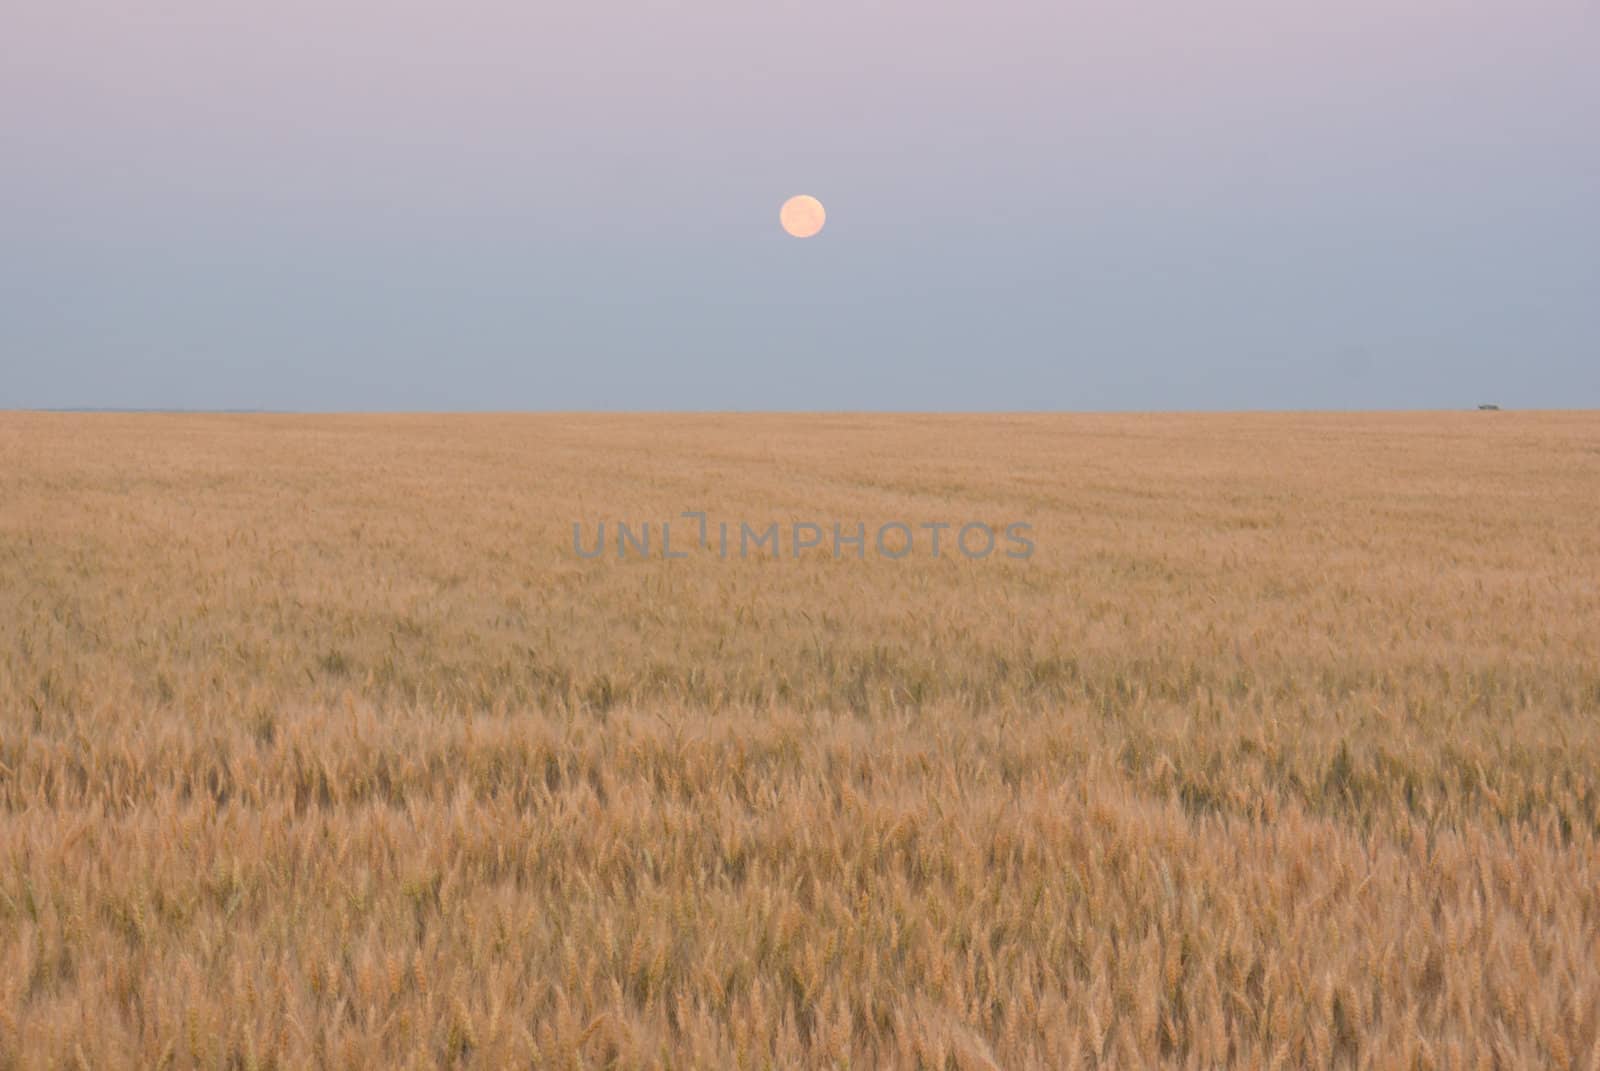 Wheat field against blue twilight sky